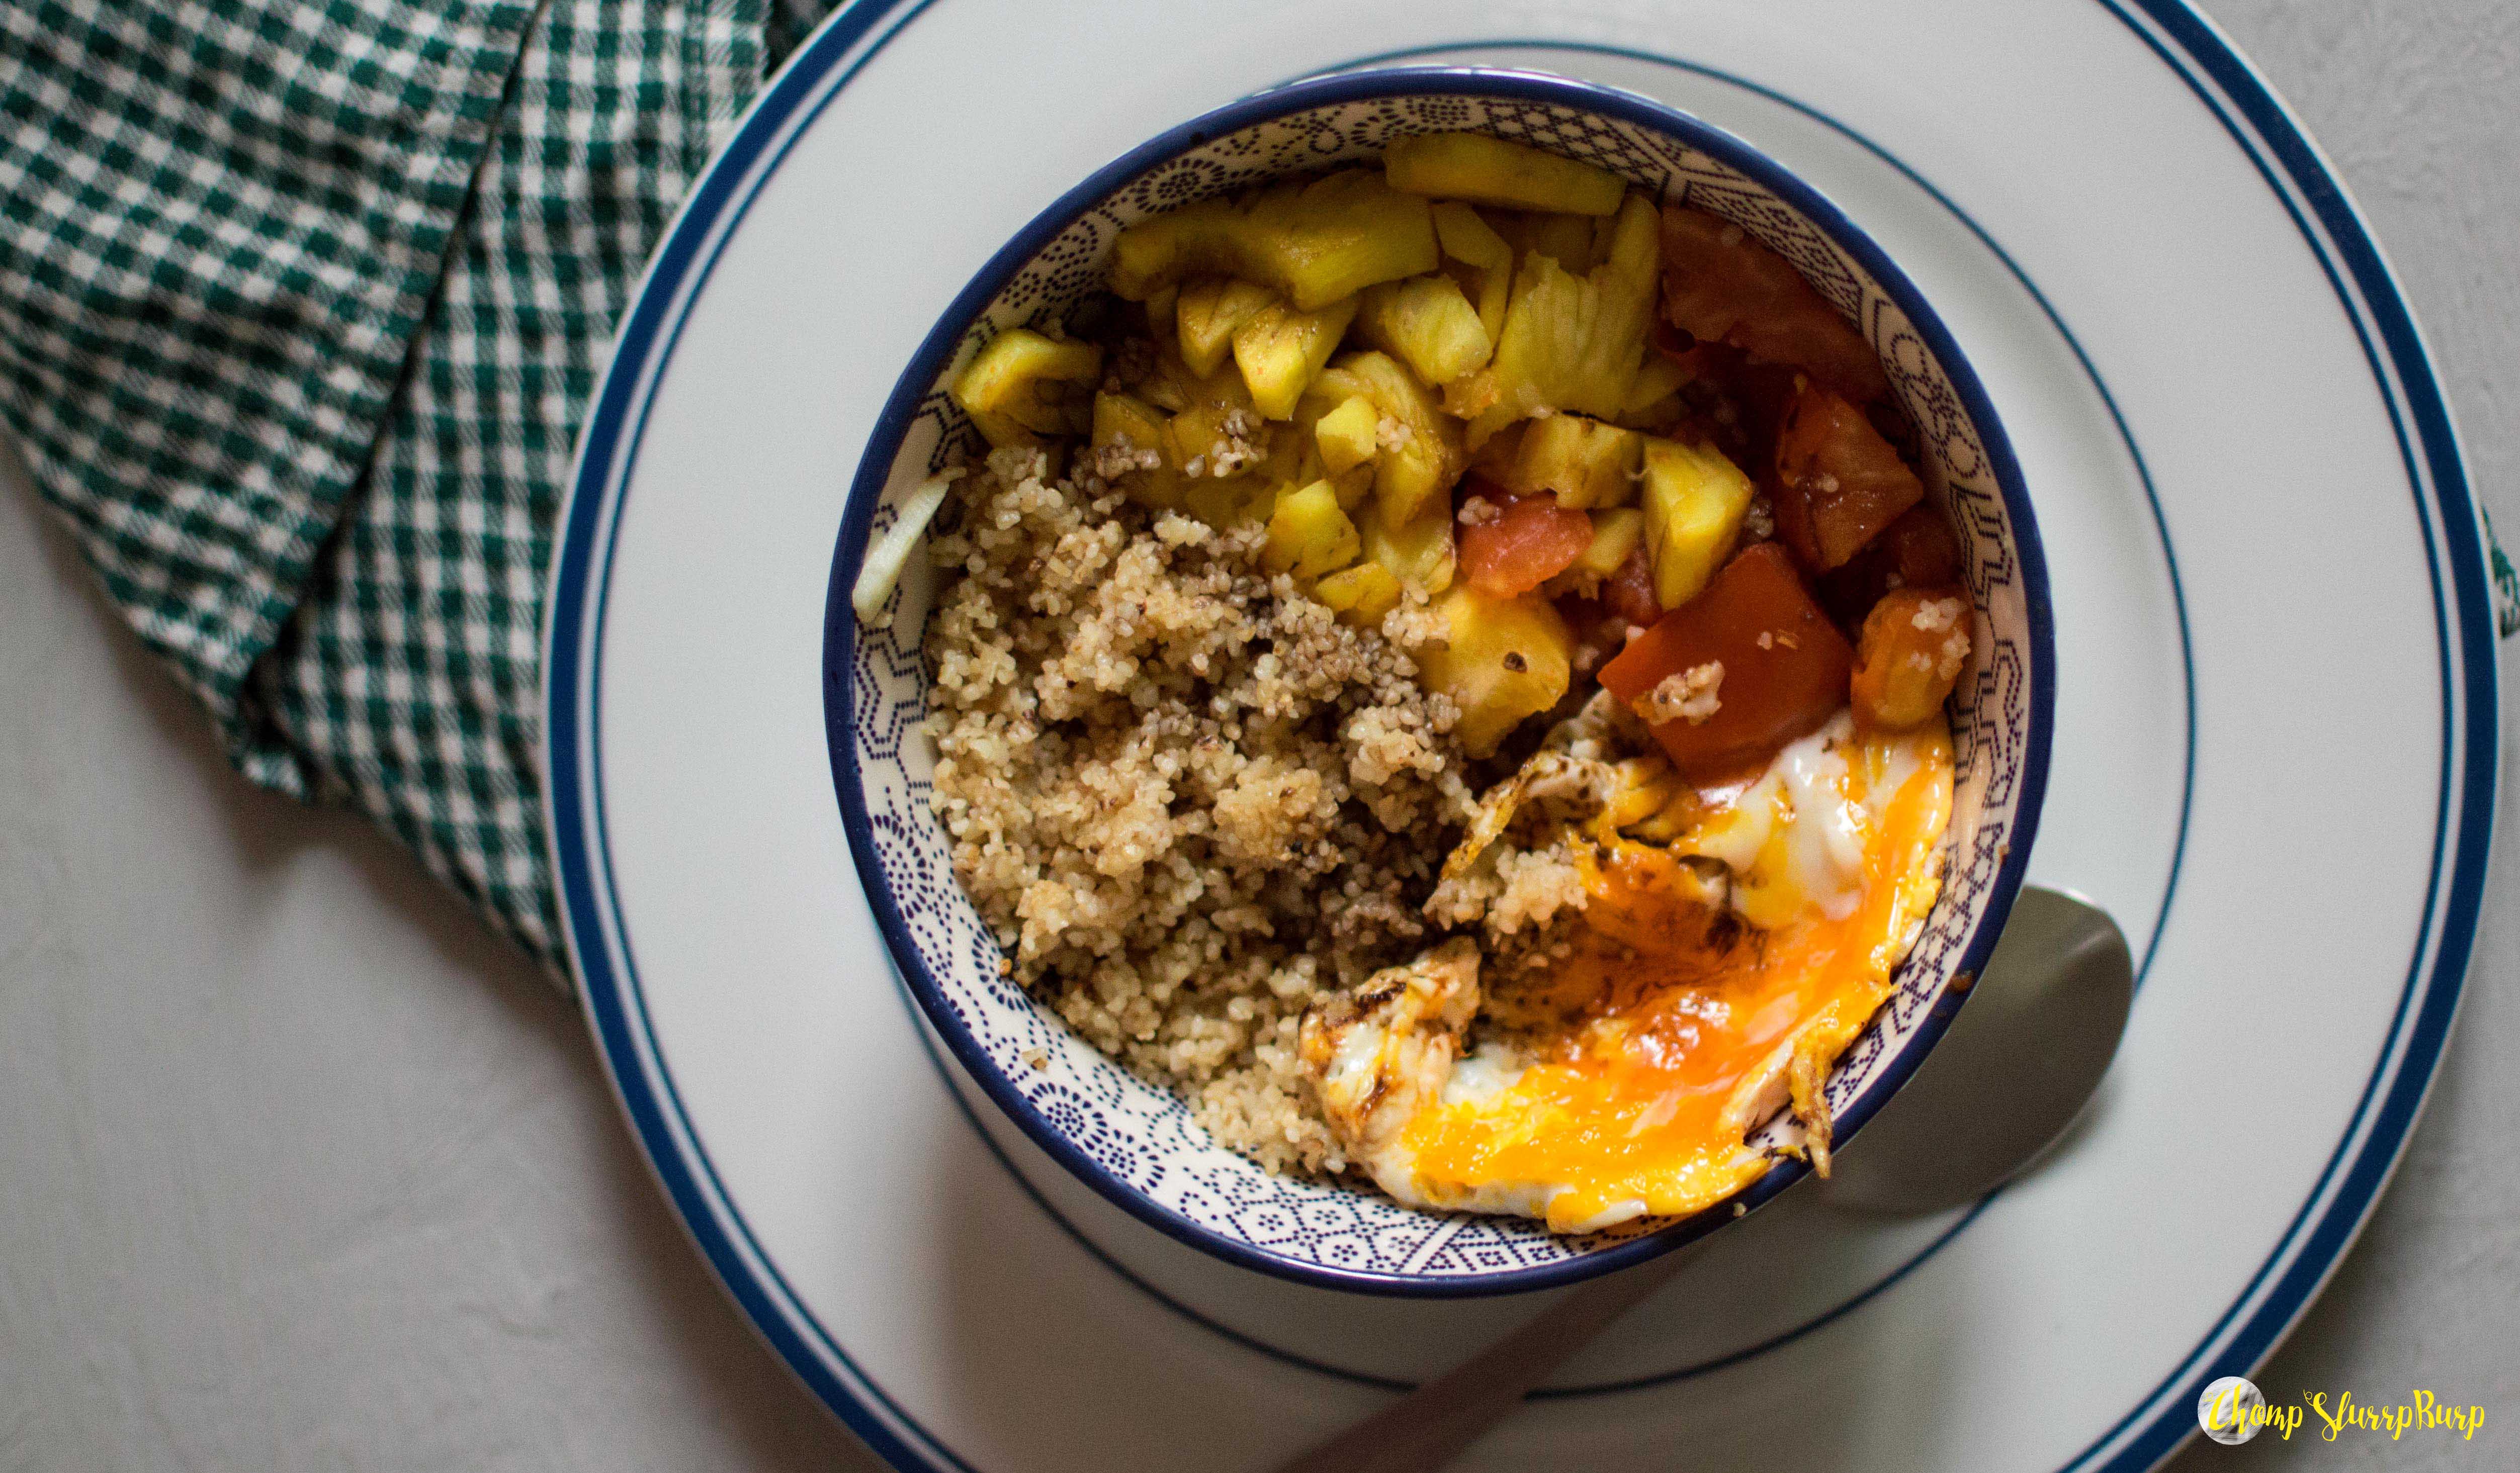 Healthy Porridge Bowl